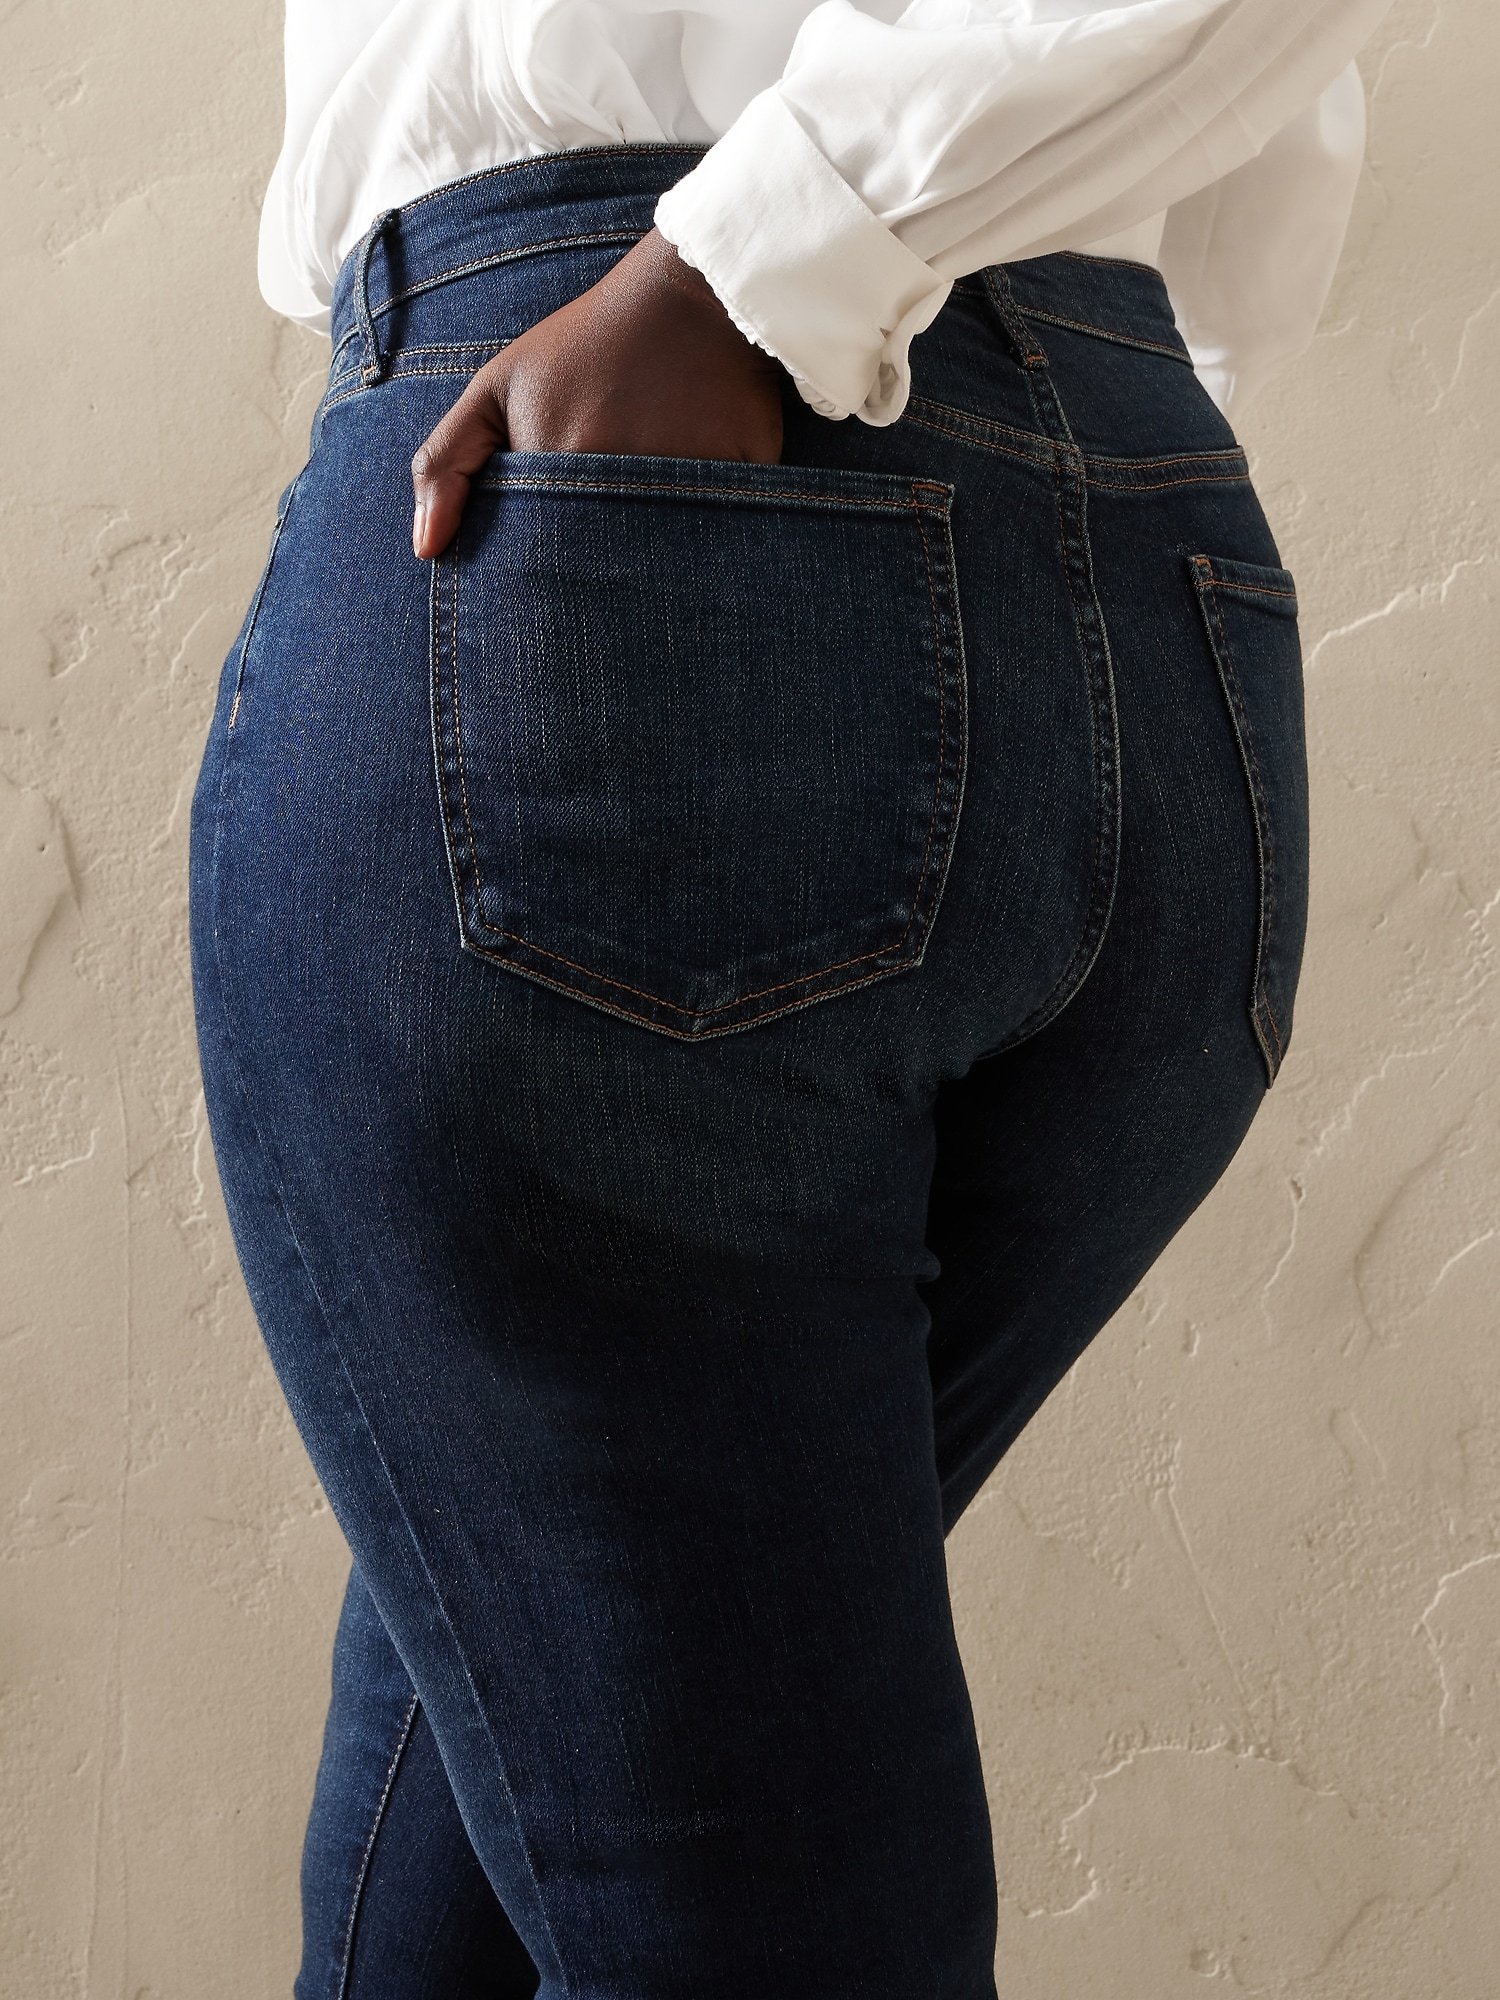 Curvy Skinny Women's Jeans - Dark Wash